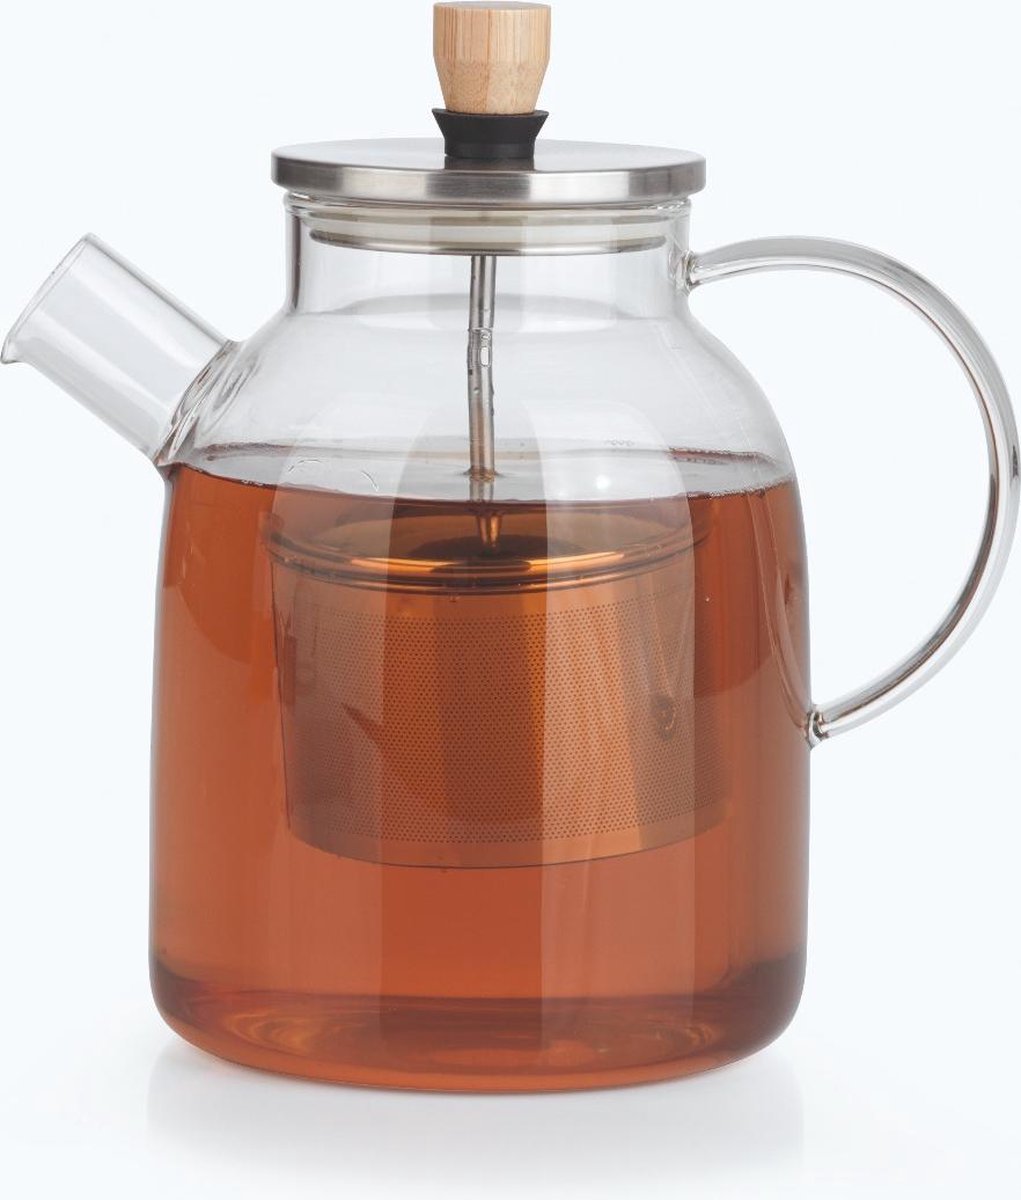 BEEM Teapot Glass, Glazen theepot met theefilter – 1,5L, Glas/Bamboo/RVS